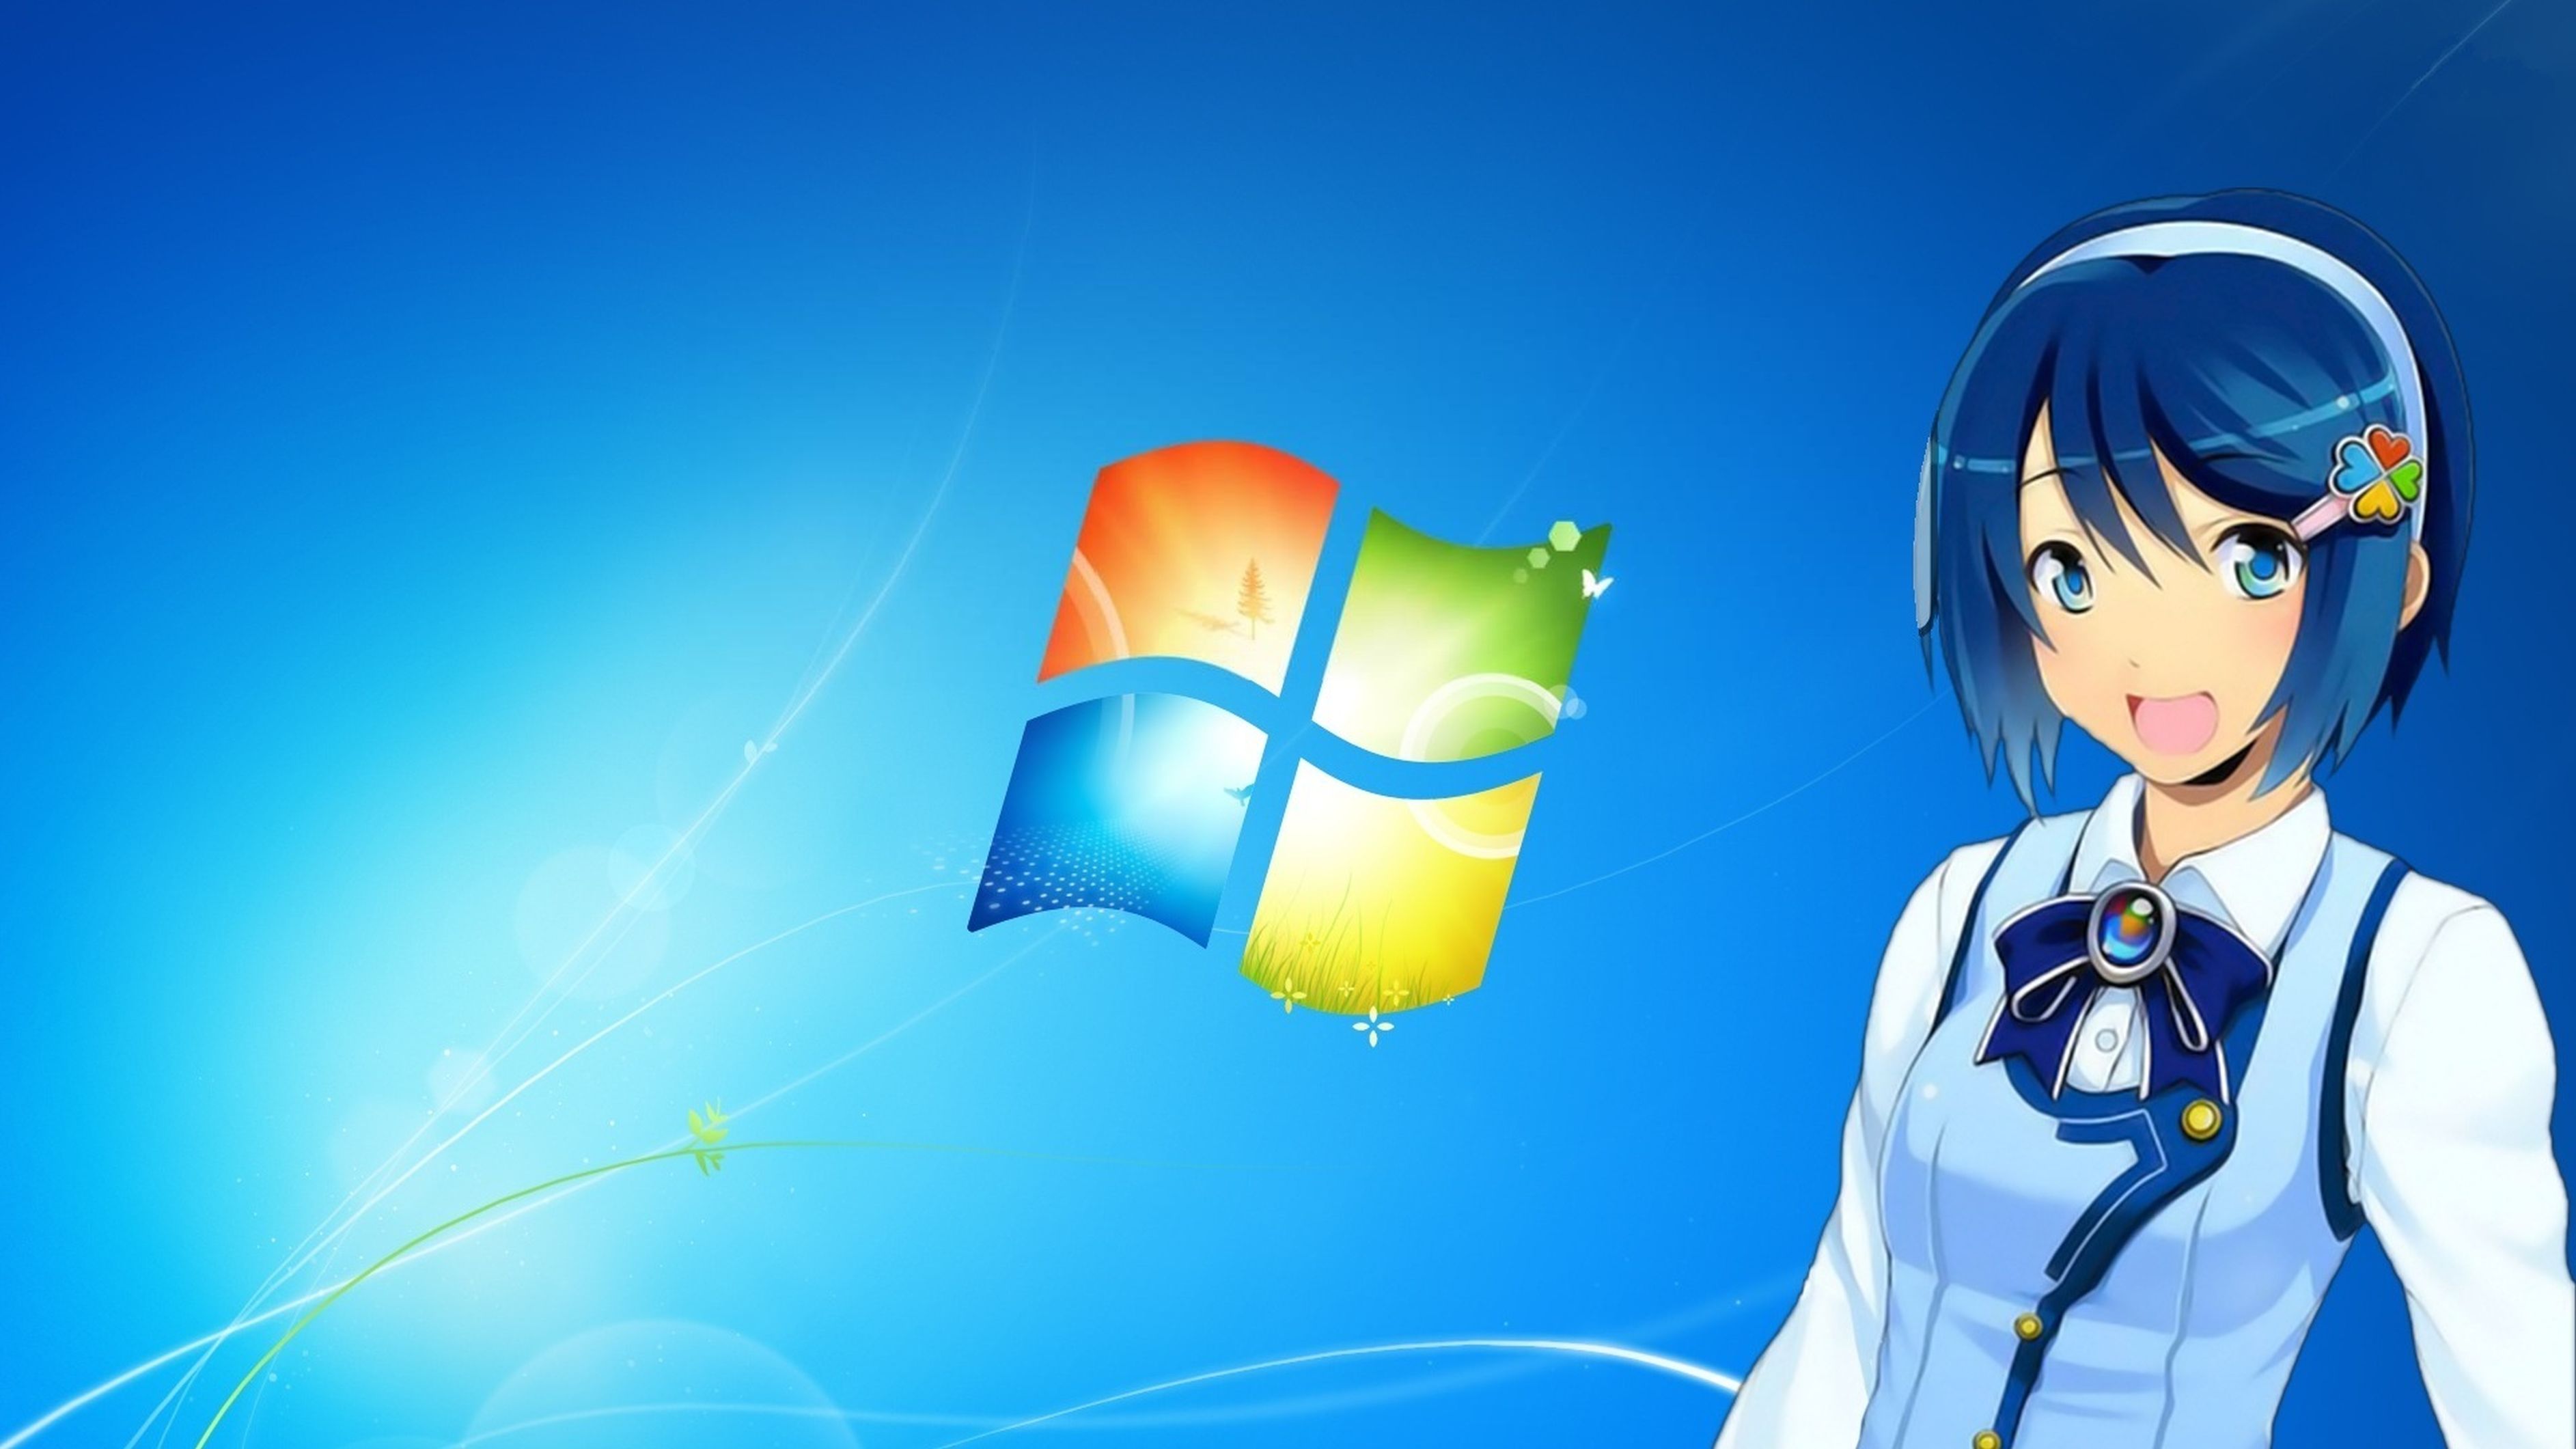 Anime Wallpaper for Windows 10  WallpaperSafari